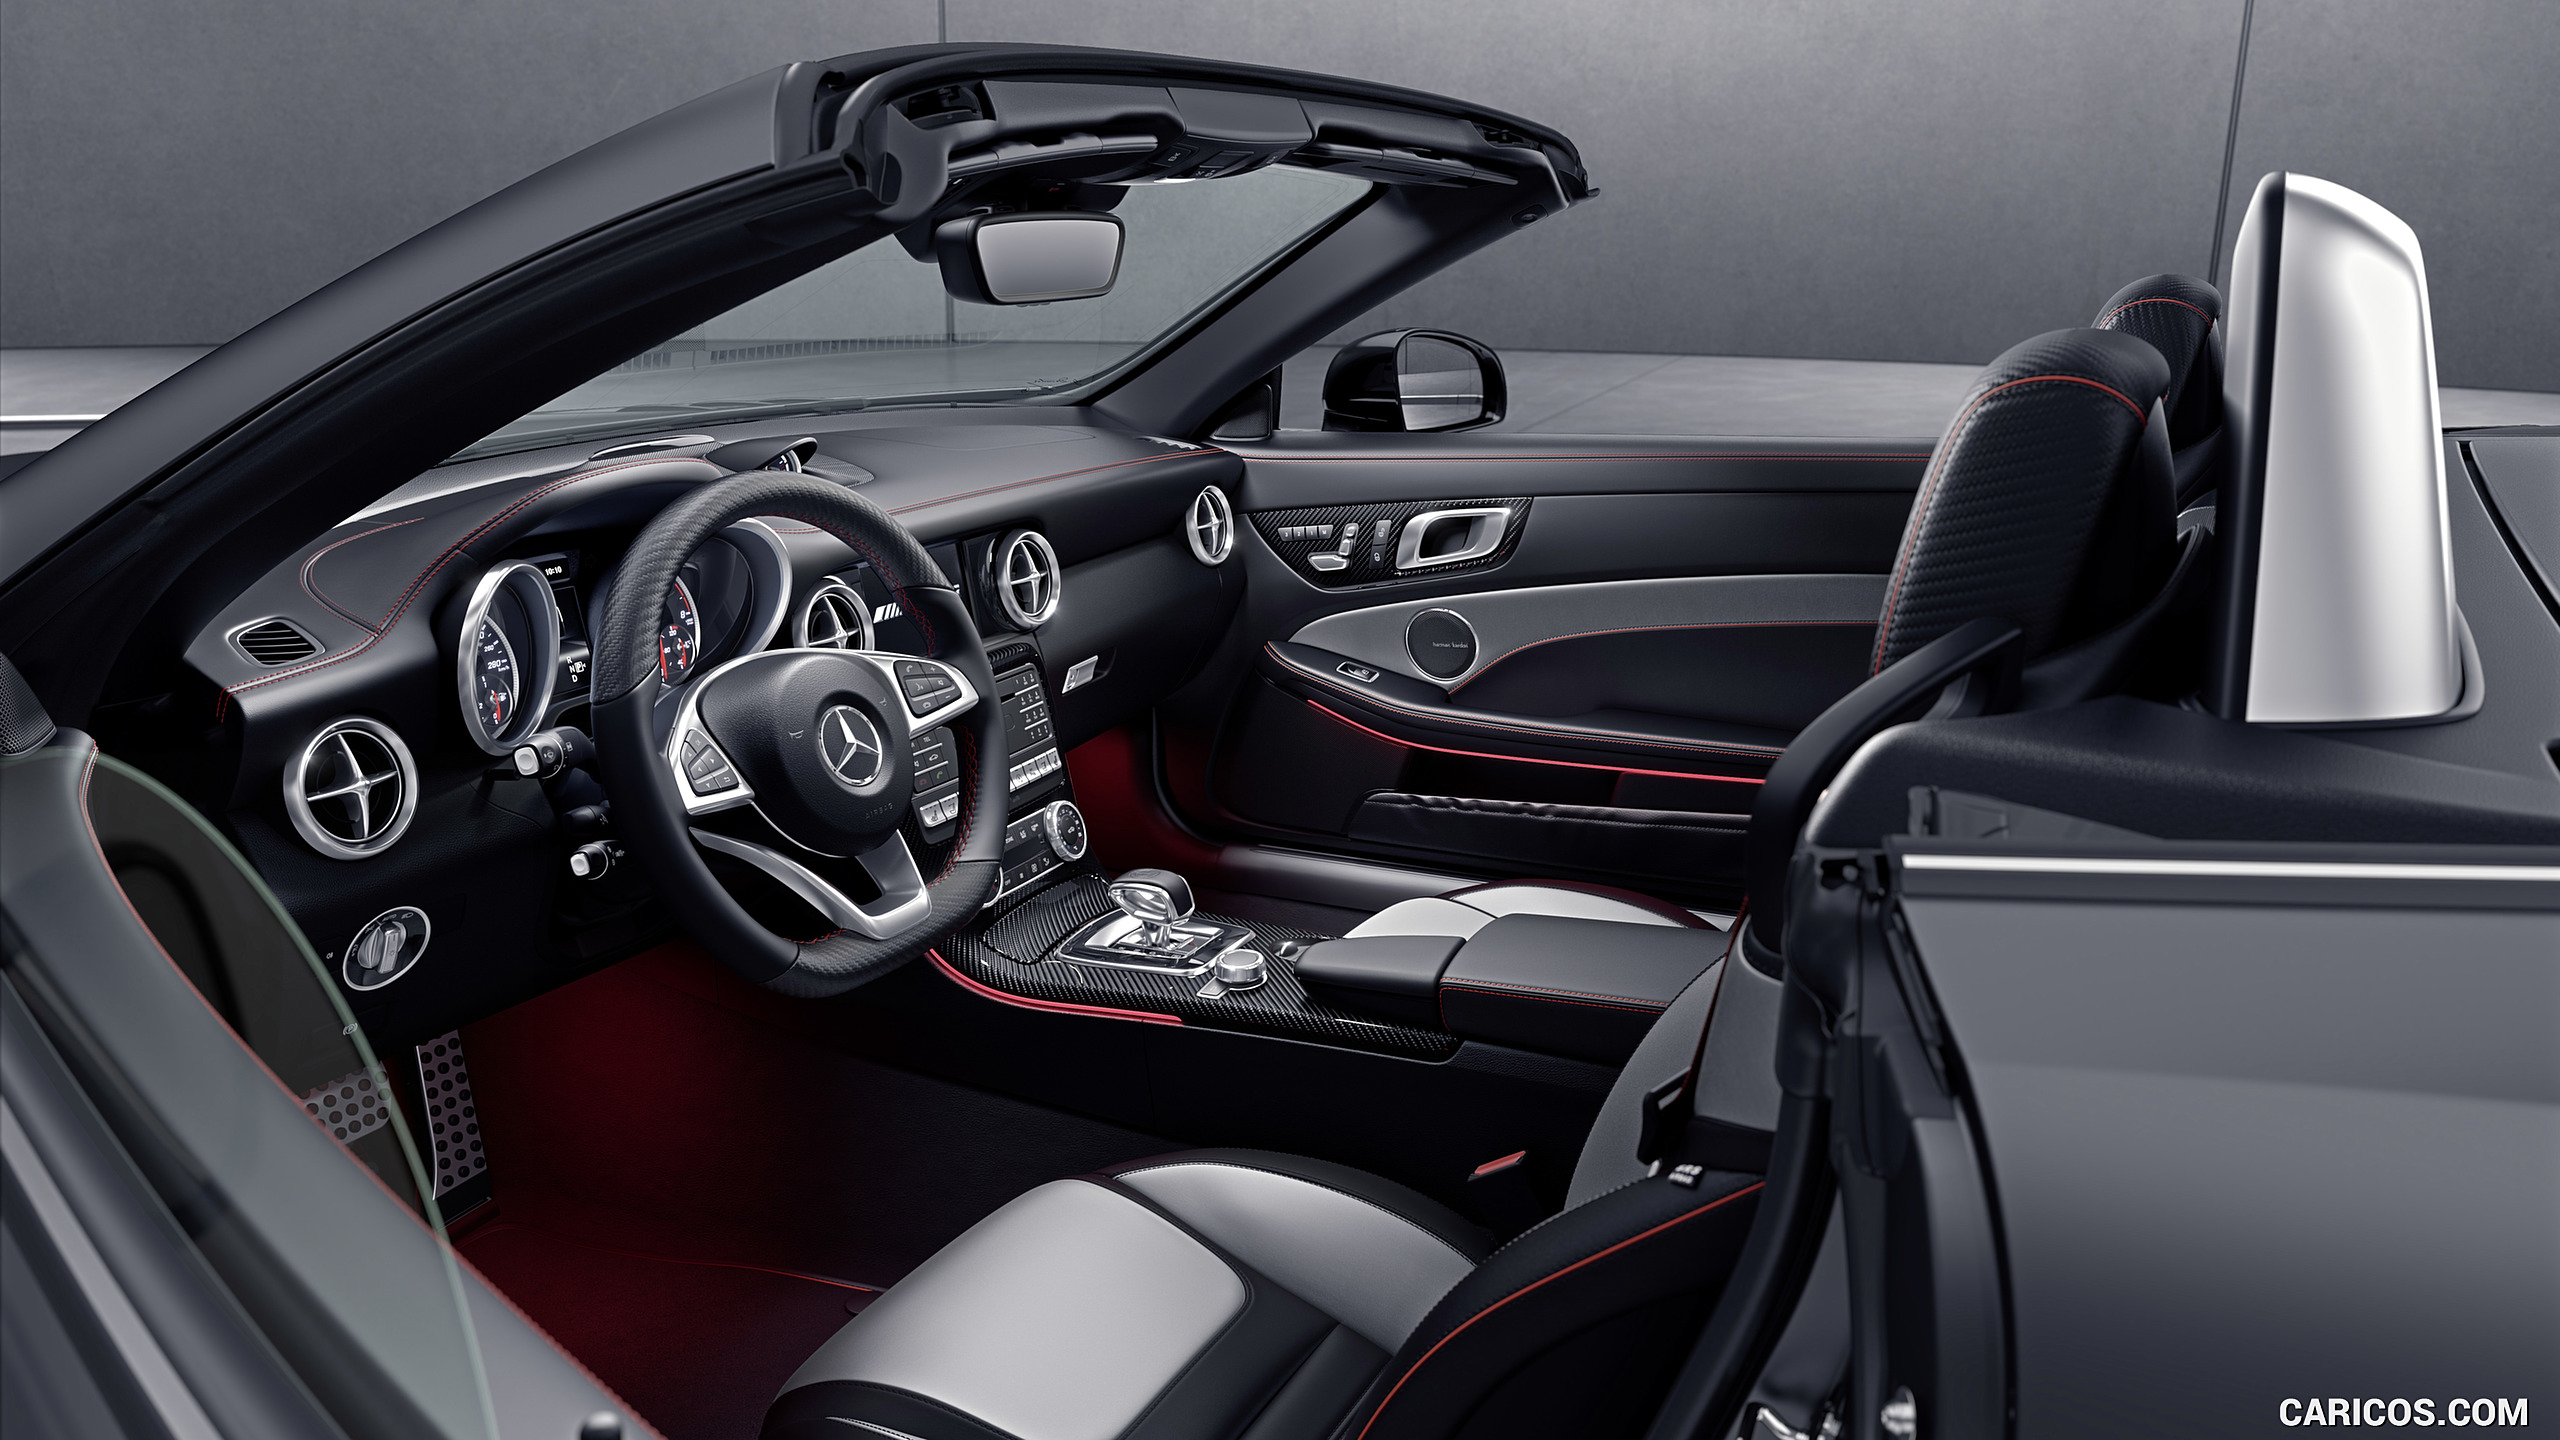 2017 Mercedes-AMG SLC 43 RedArt Edition - Interior, #3 of 13